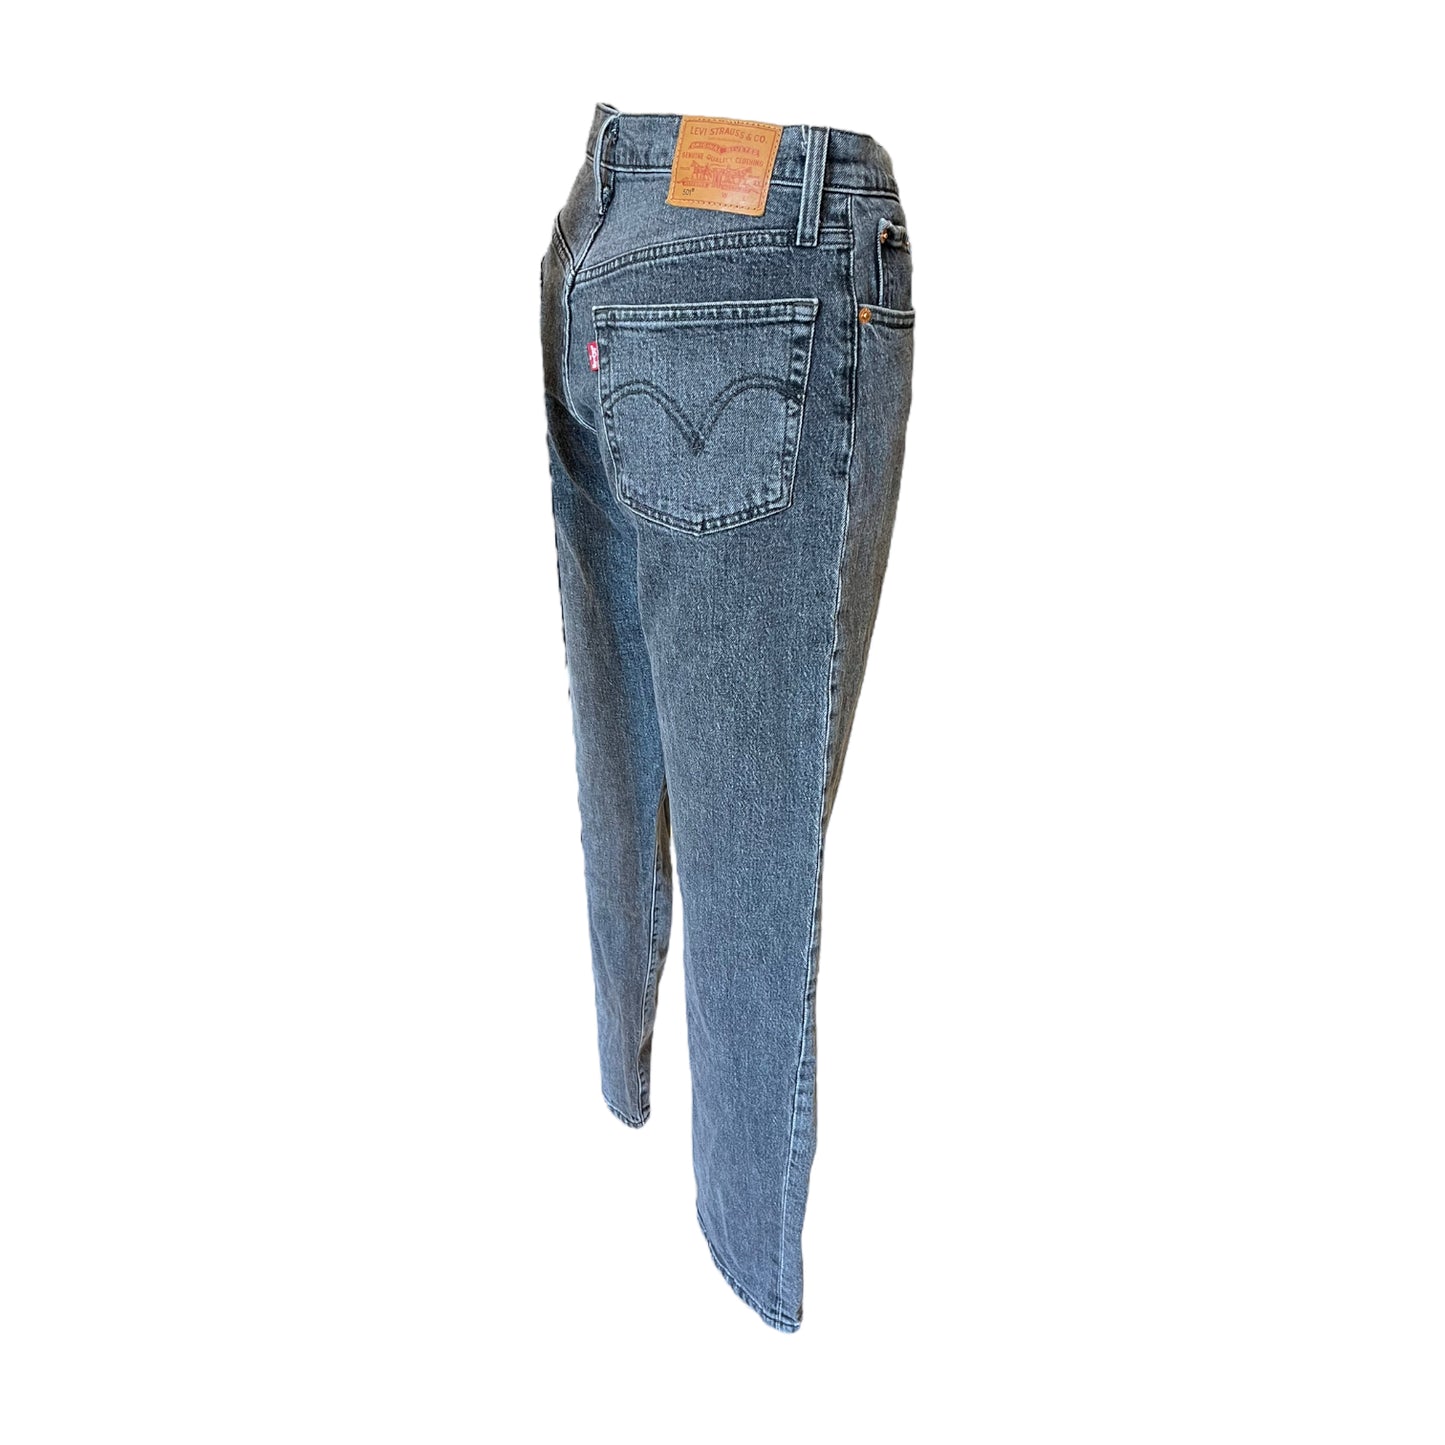 Levi's Dark Grey 501 Jeans